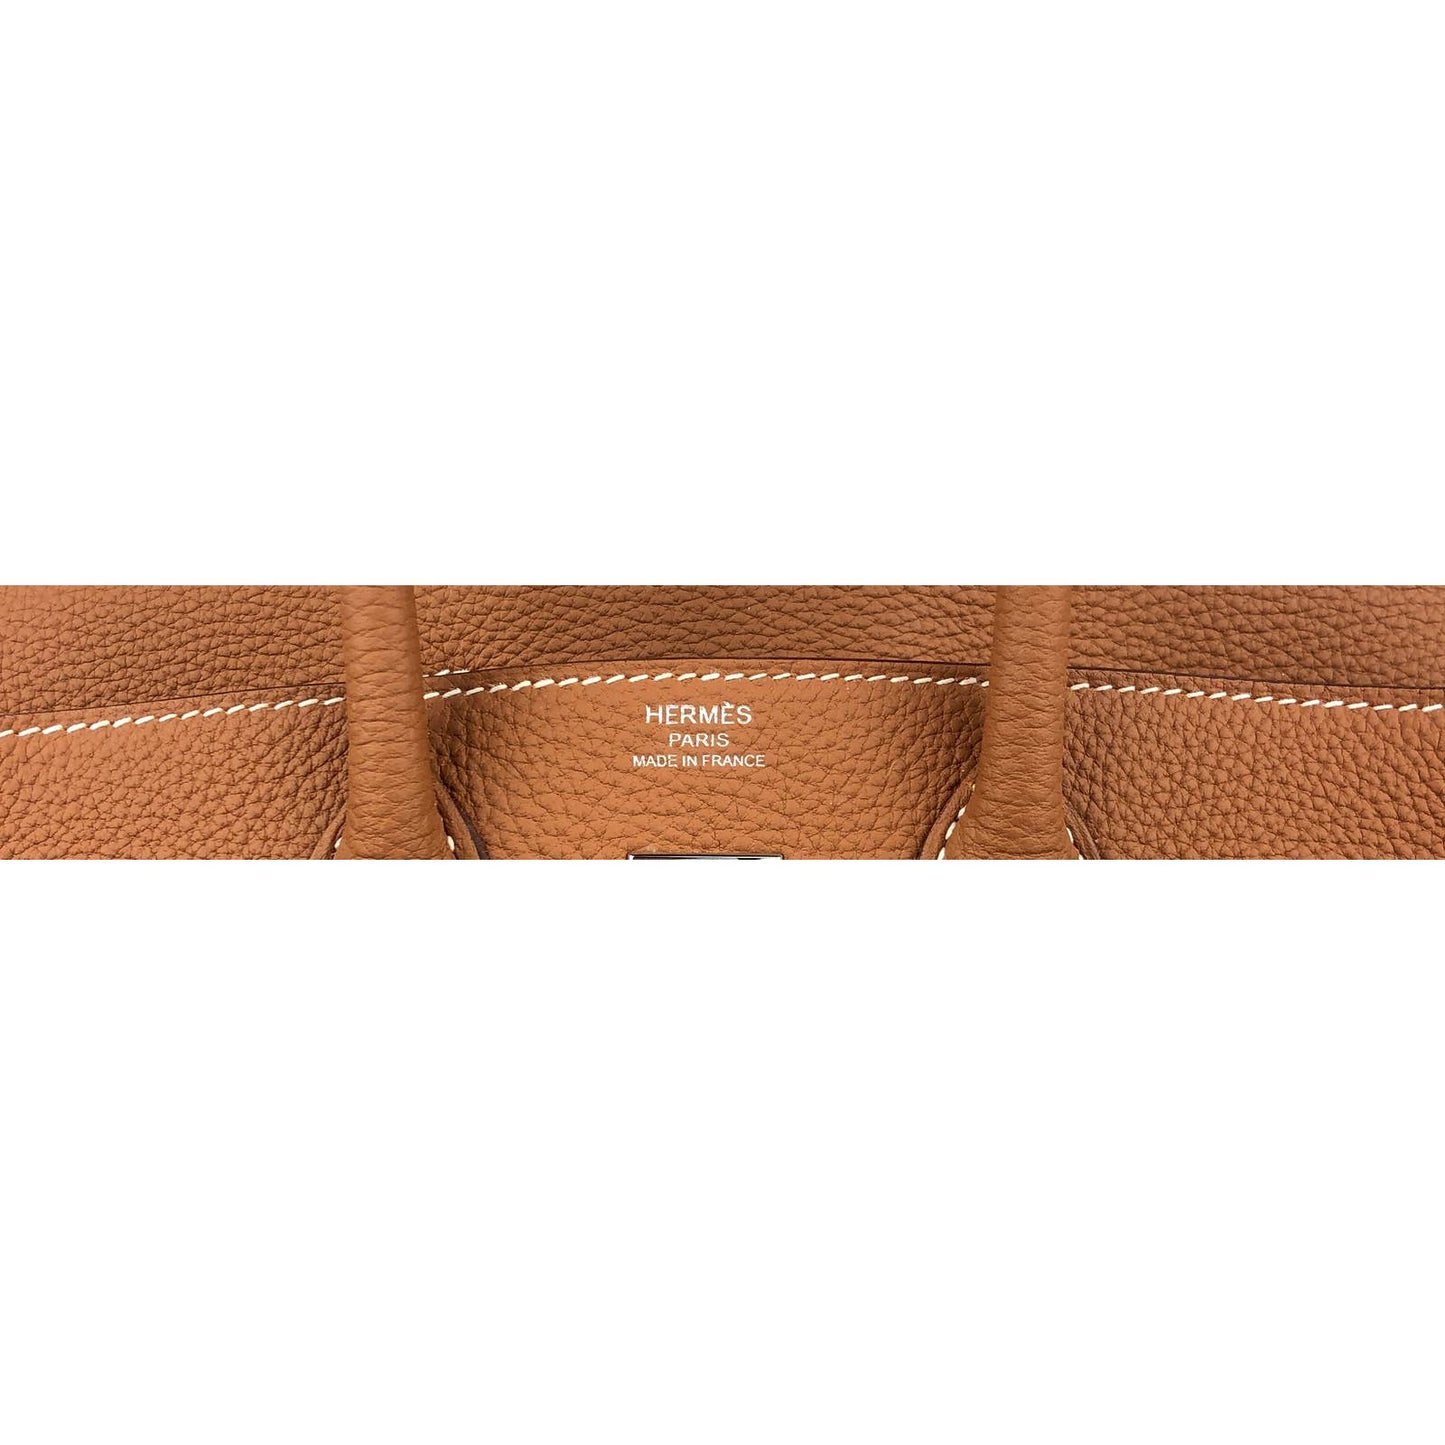 Hermes Birkin 25 Gold Tan Togo Leather Palladium Hardware 2021 Handbag Bag